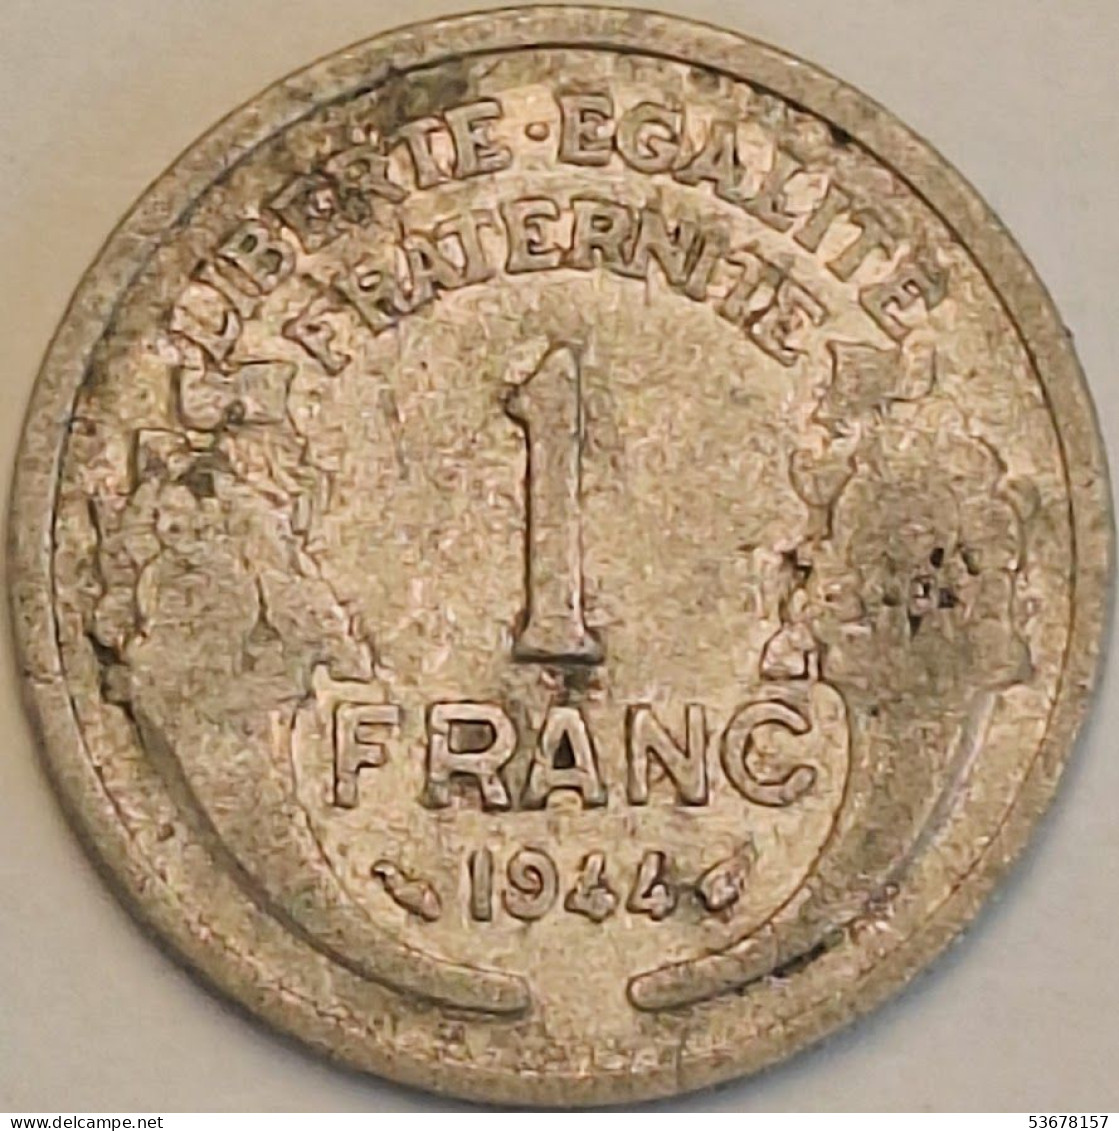 France - Franc 1944, KM# 885a.1 (#4081) - 1 Franc